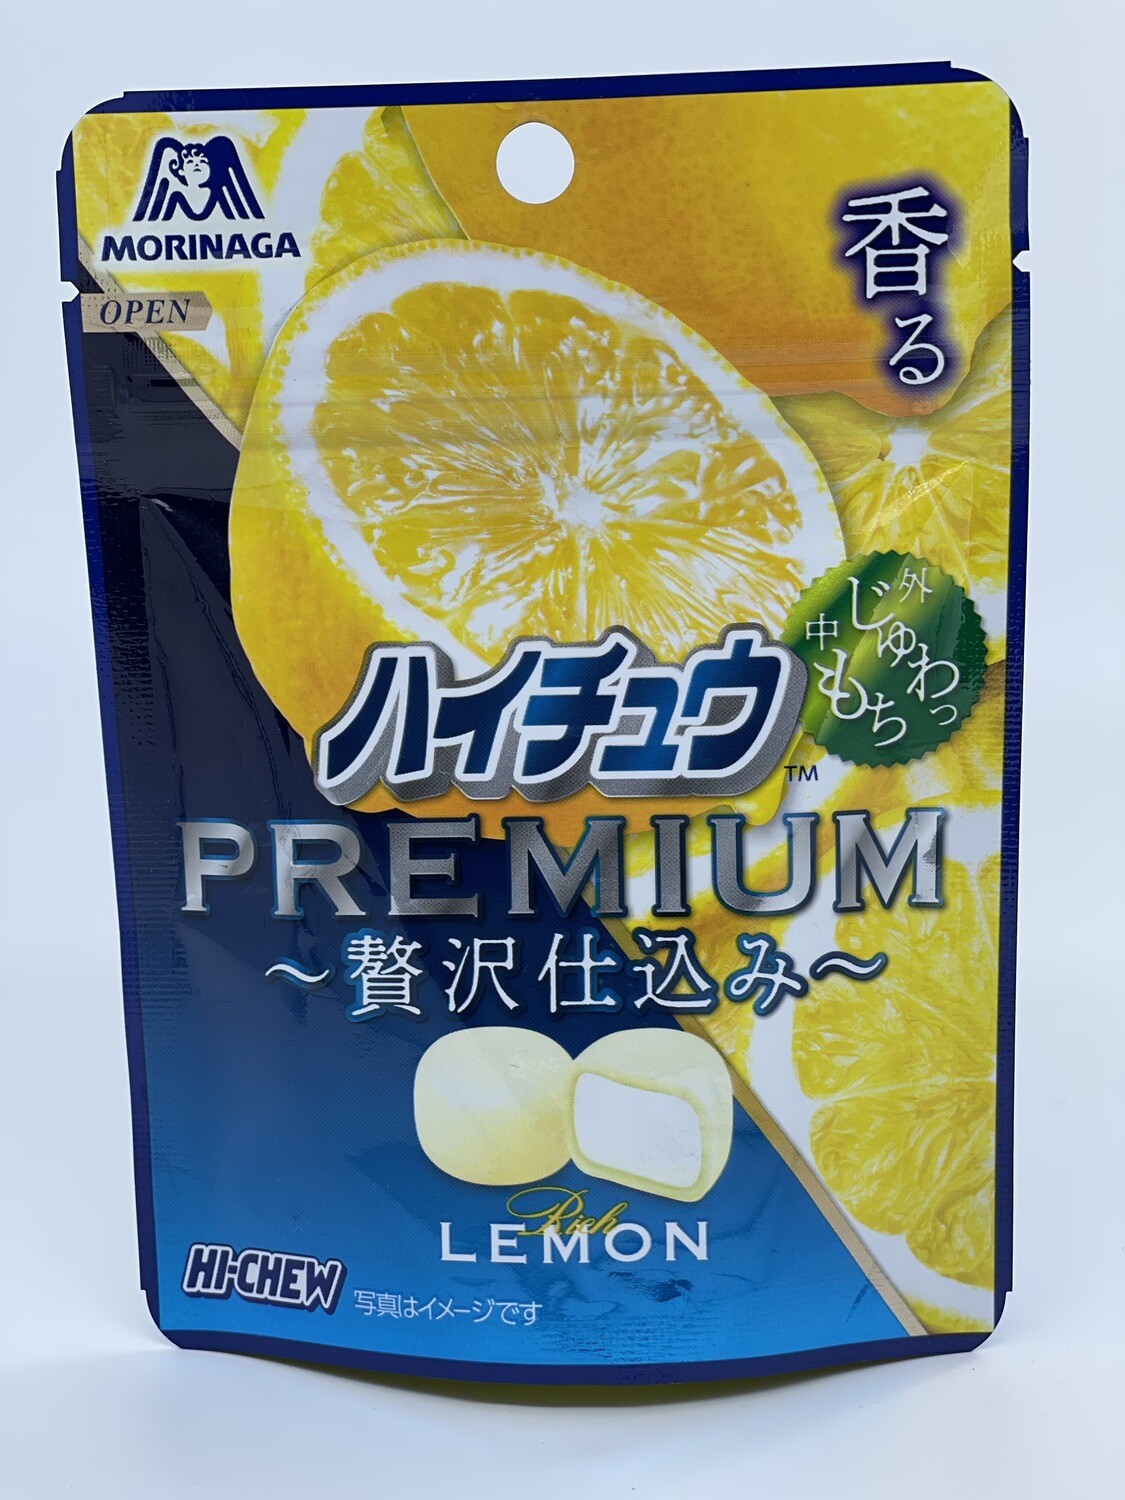 Hi-Chew Premium Lemon 